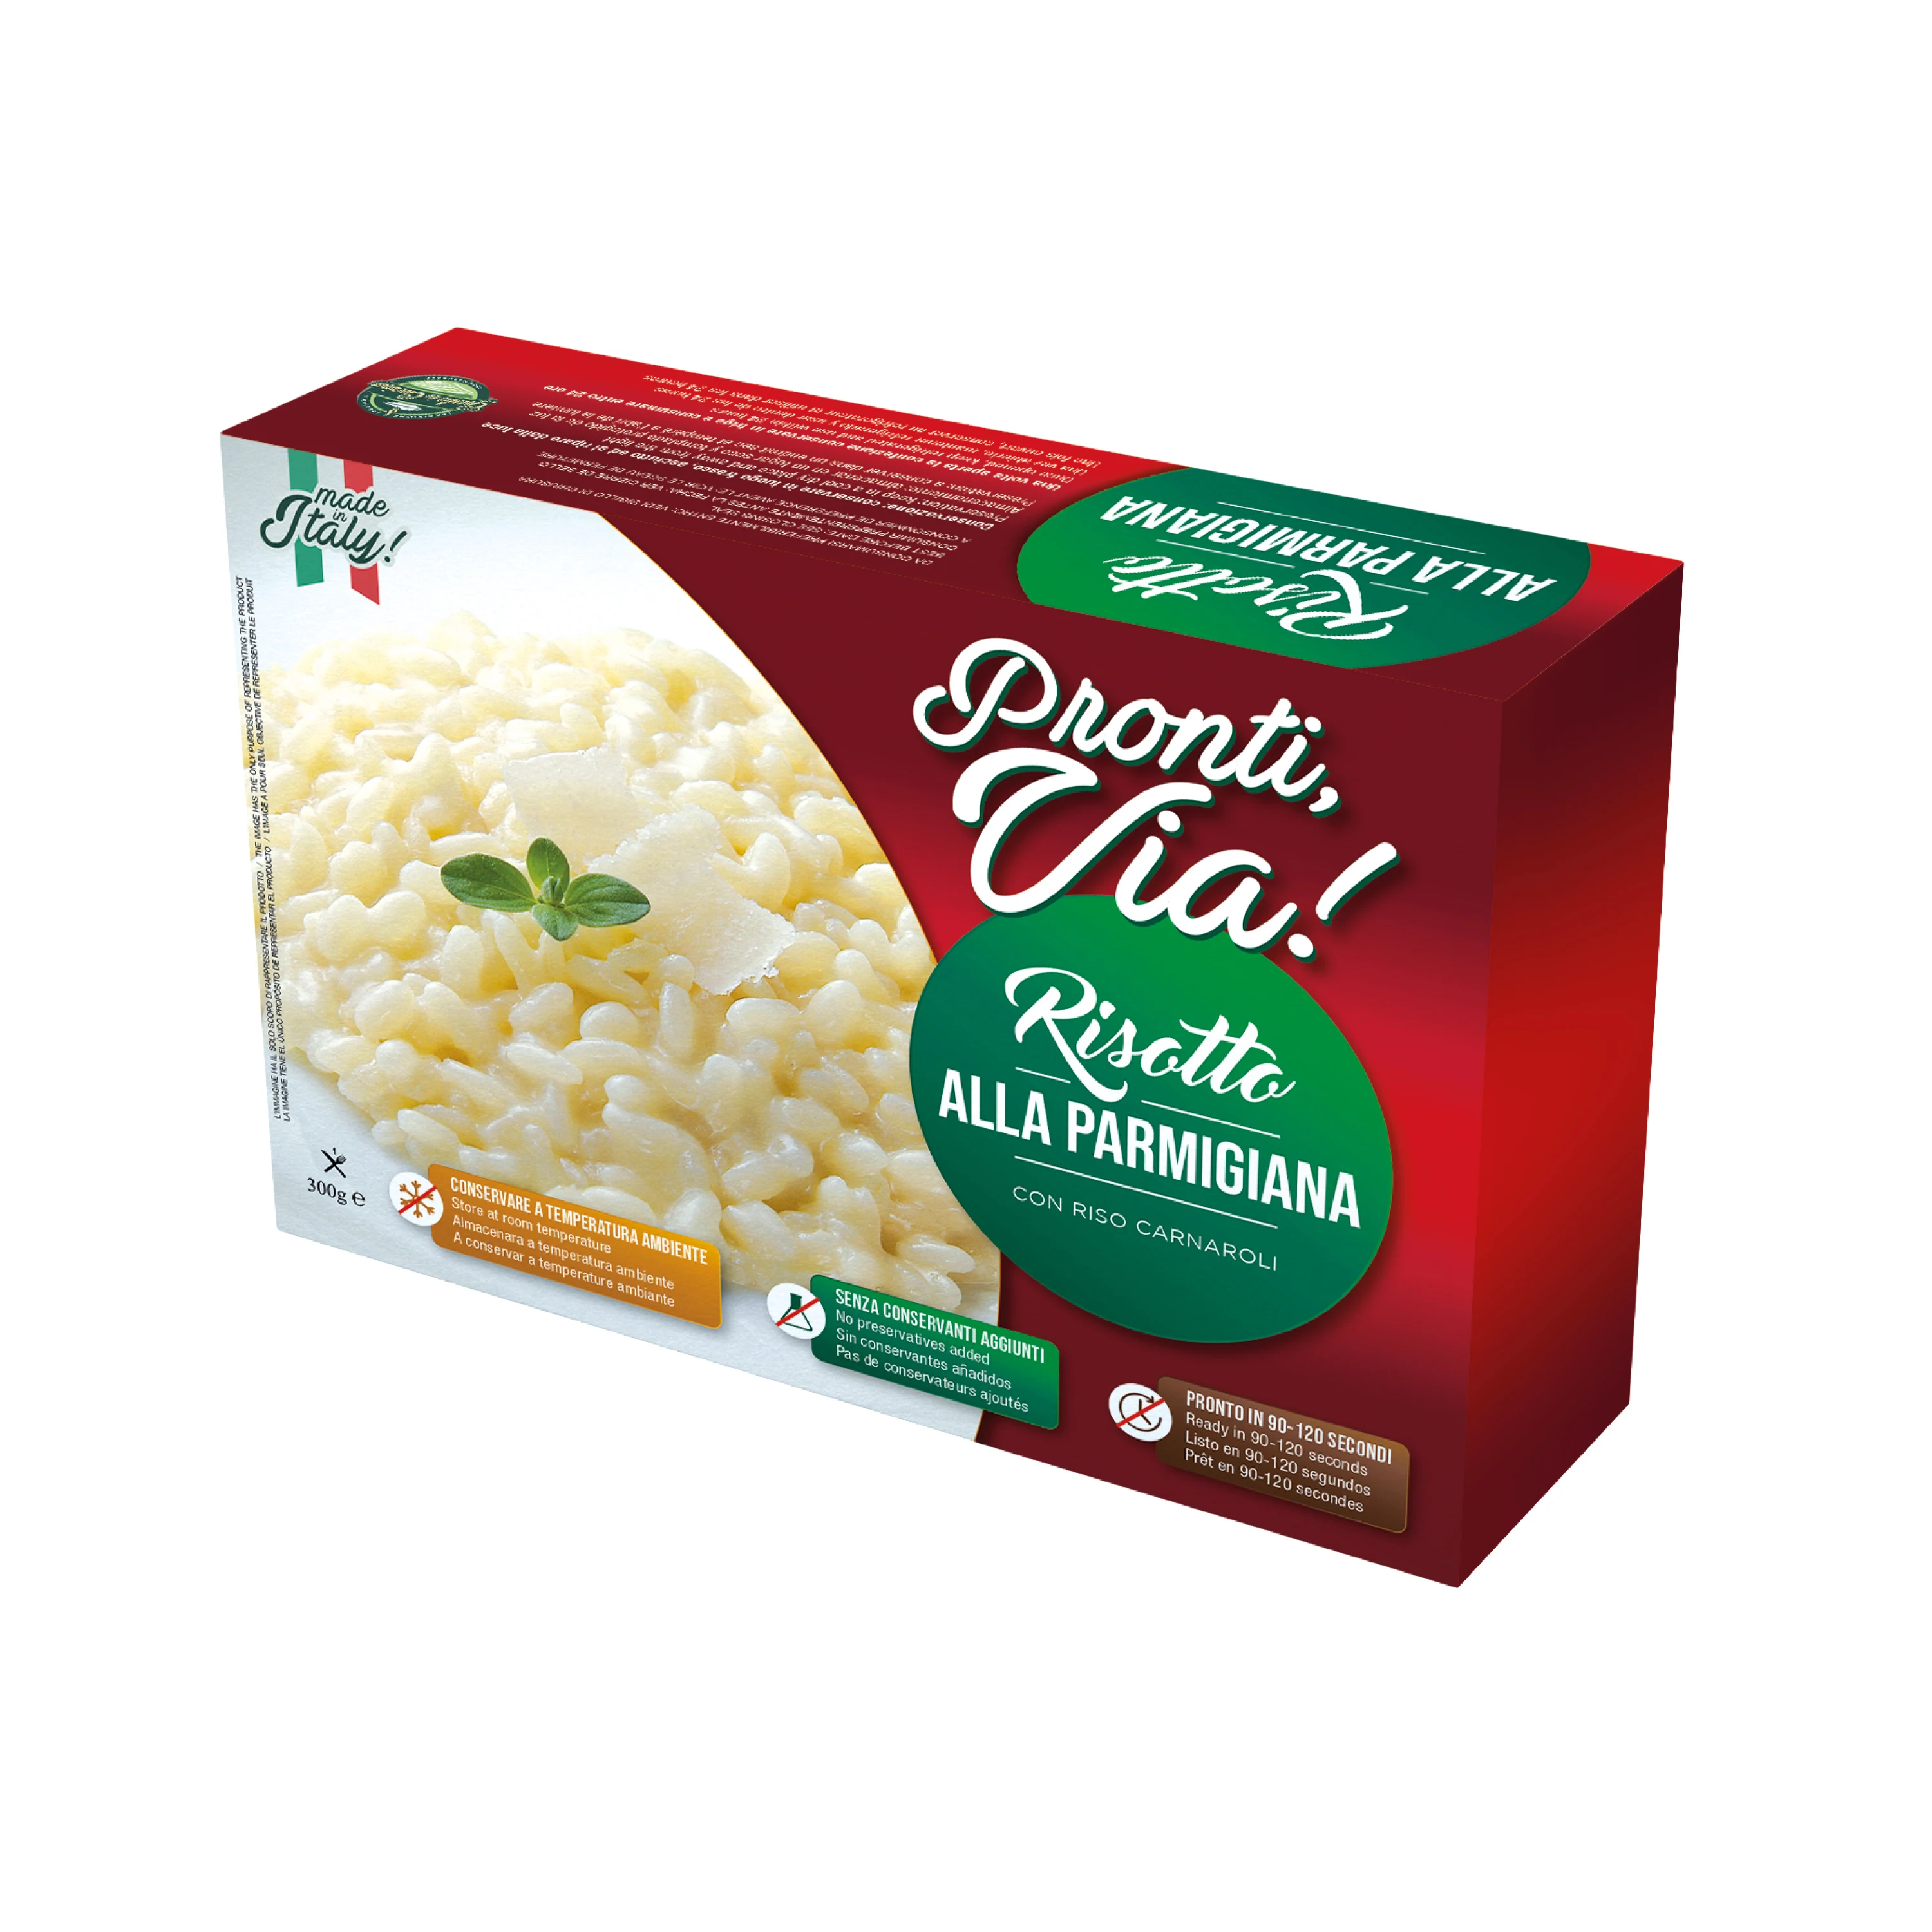 
Top Quality Instant rice carnaroli 